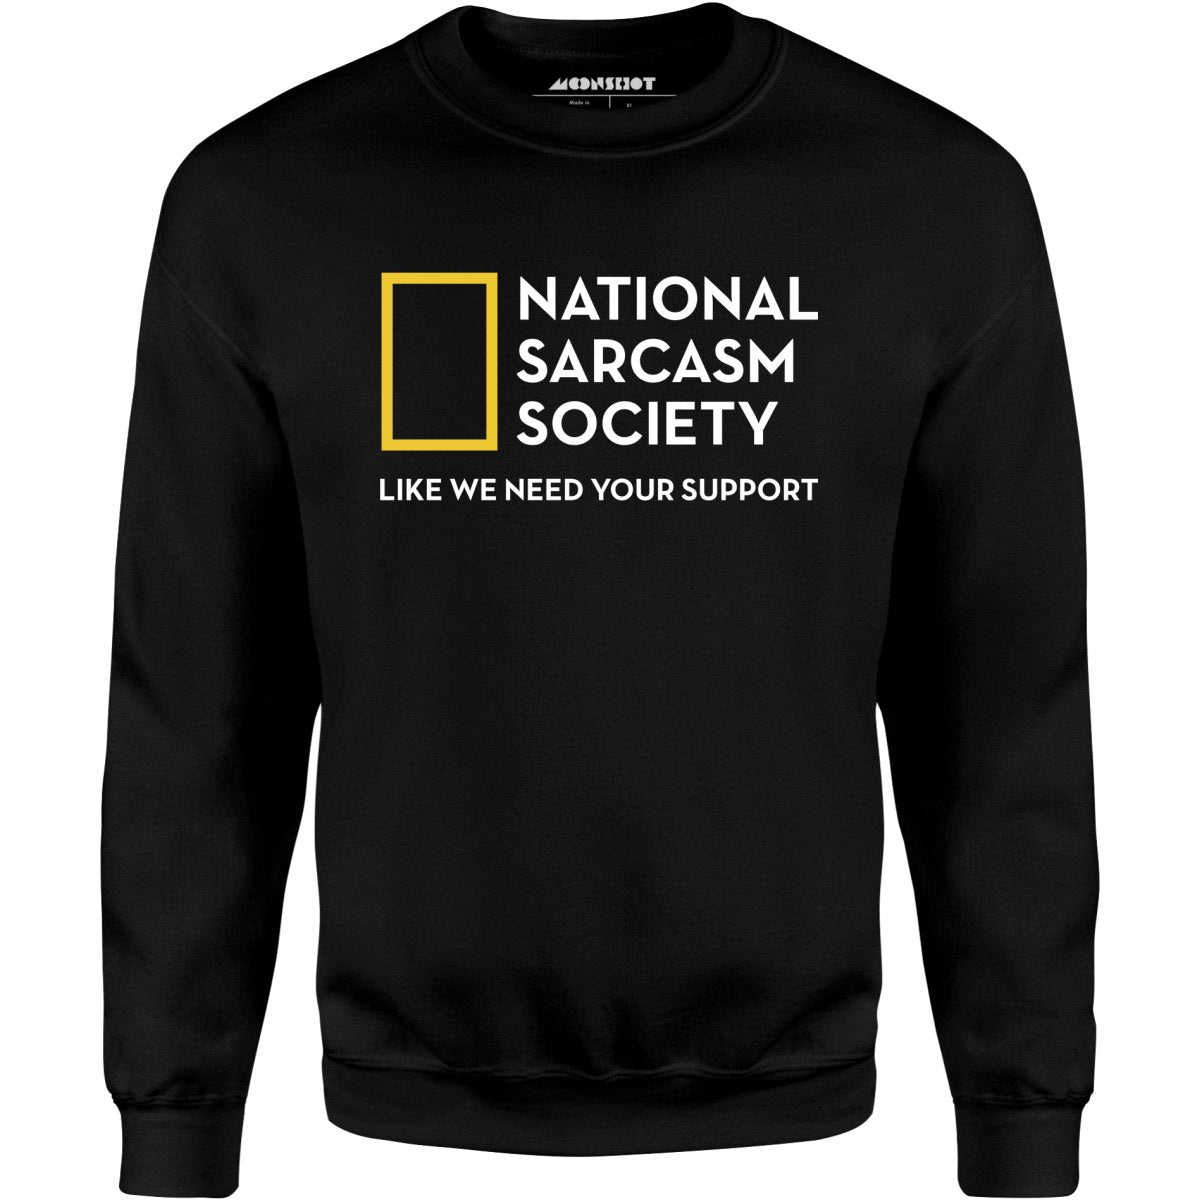 National Sarcasm Society - Unisex Sweatshirt